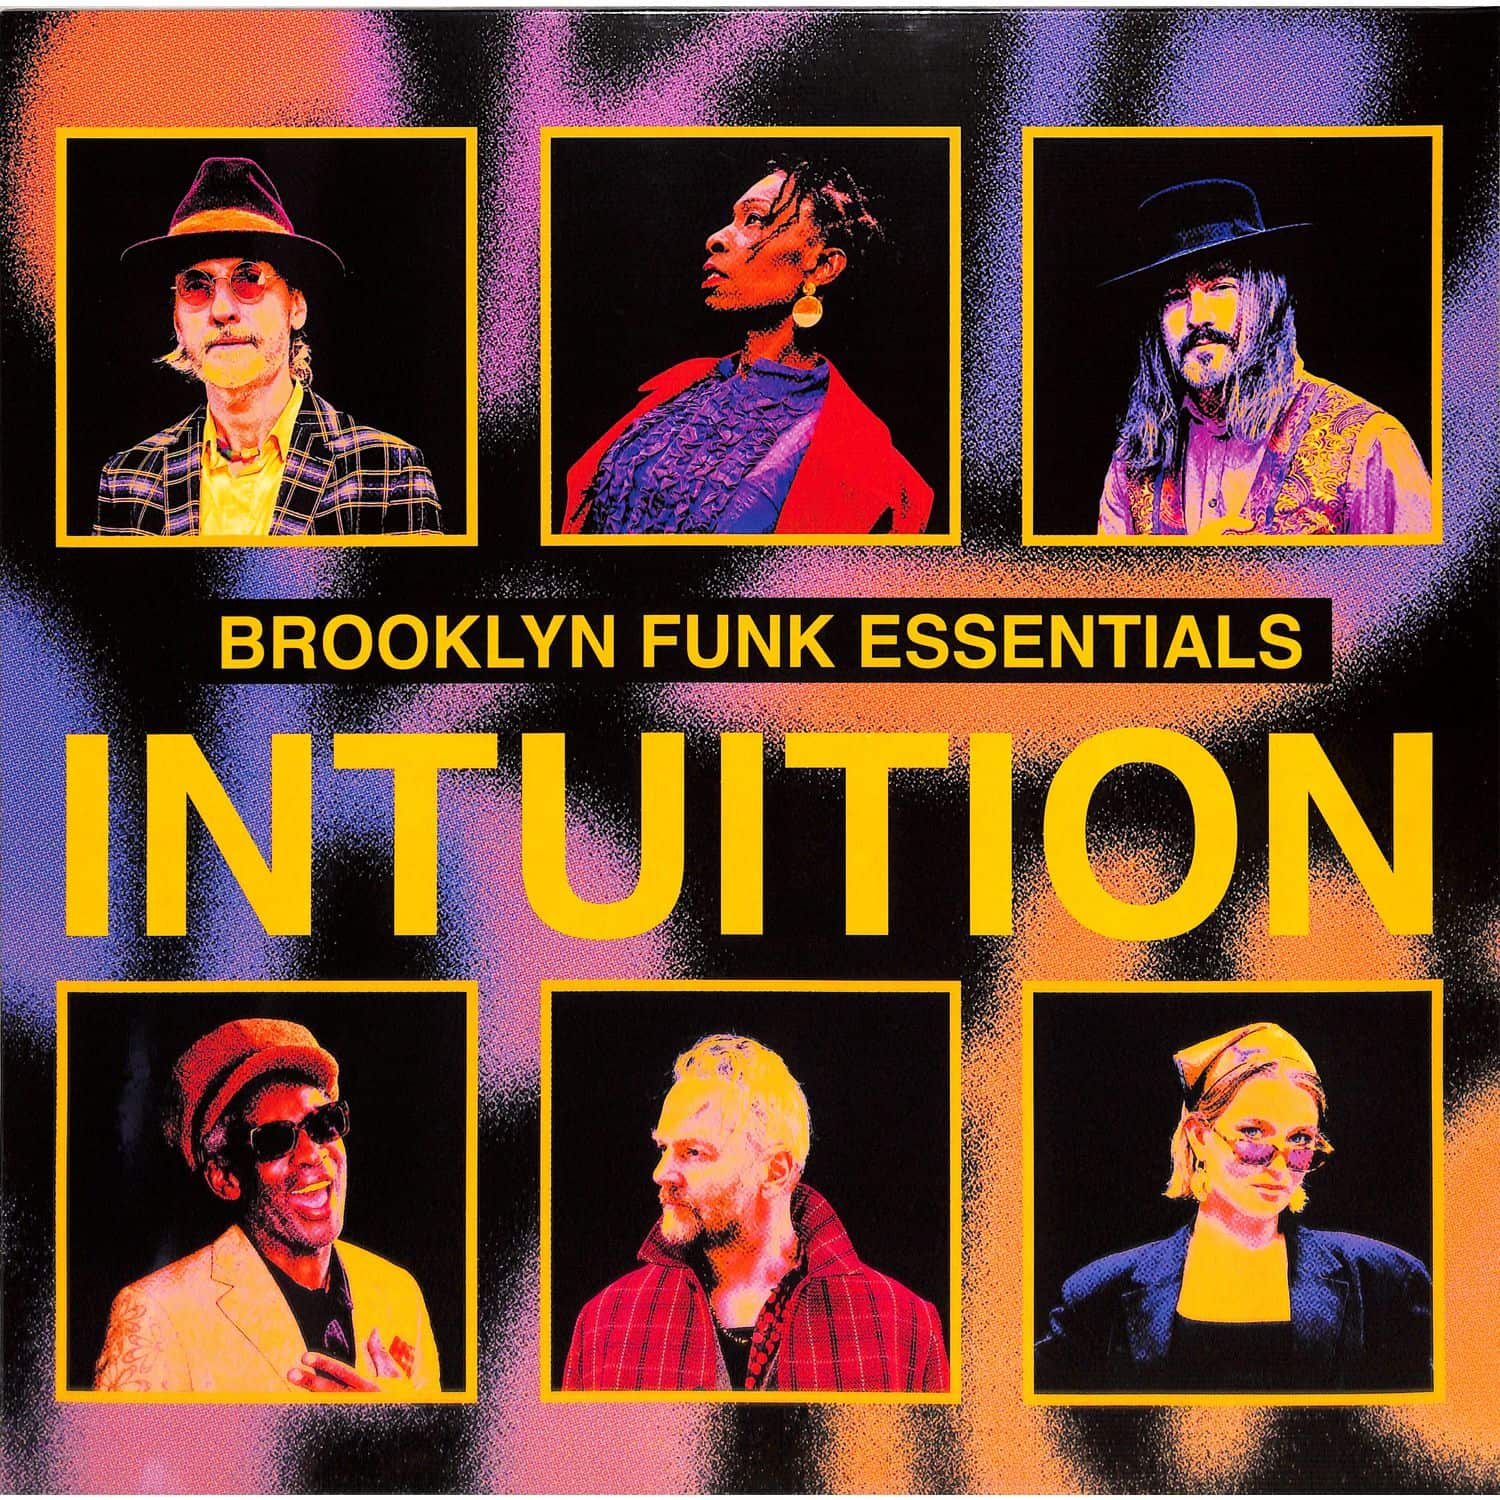 Brooklyn Funk Essentials - INSTUITION 